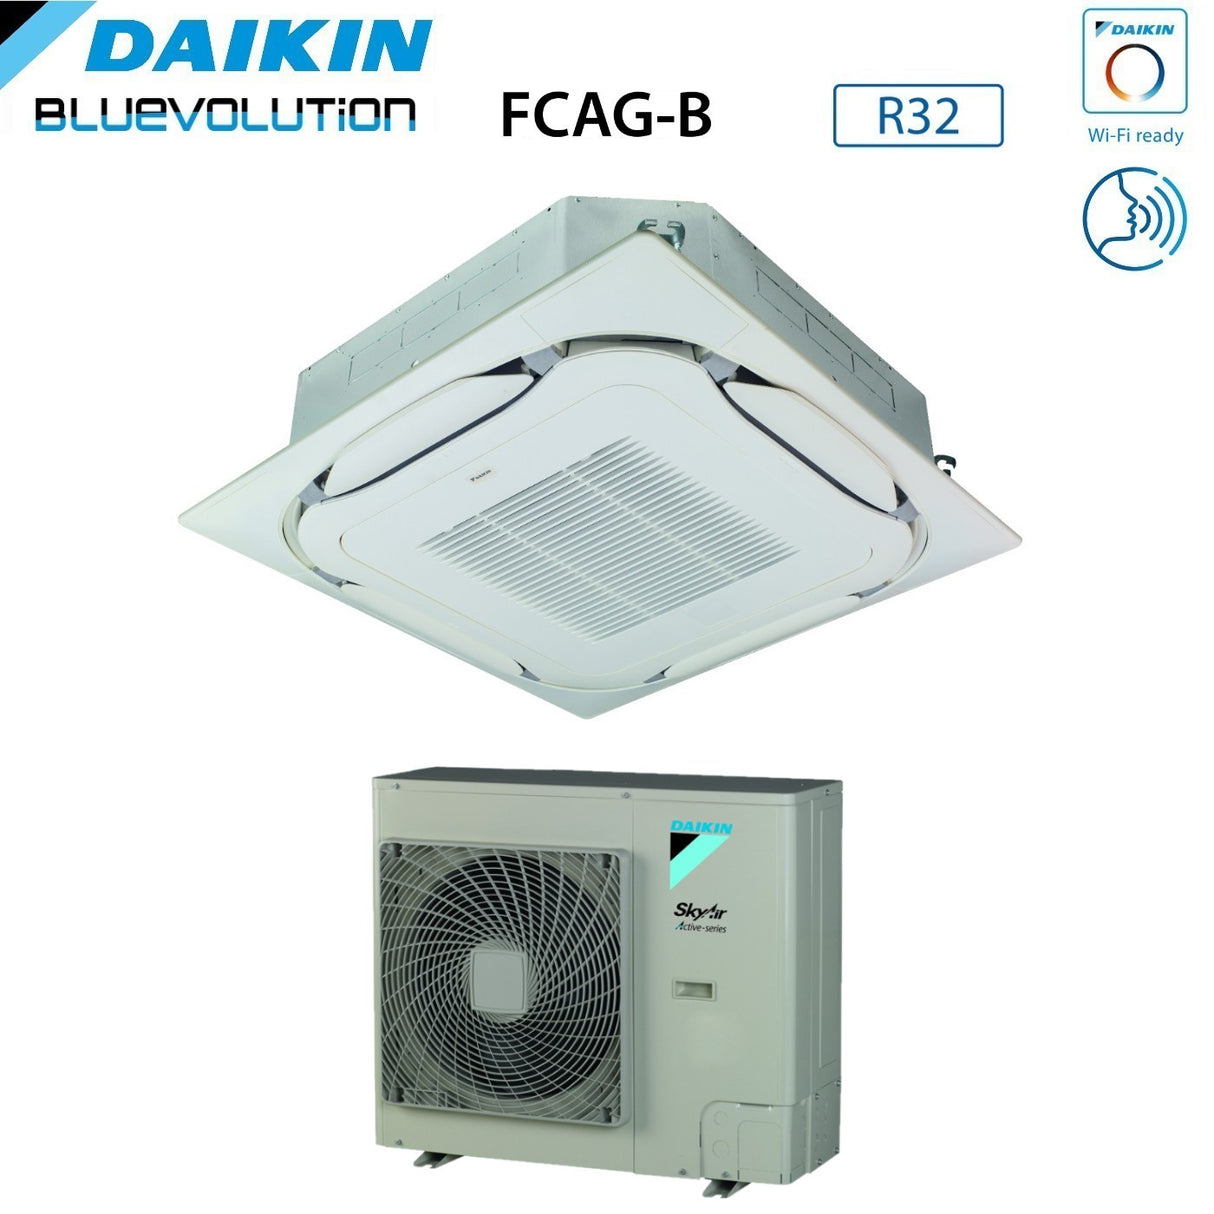 immagine-9-daikin-climatizzatore-condizionatore-daikin-bluevolution-a-cassetta-round-flow-24000-btu-fcag71b-azas71mv1-r-32-wi-fi-optional-con-griglia-standard-inclusa